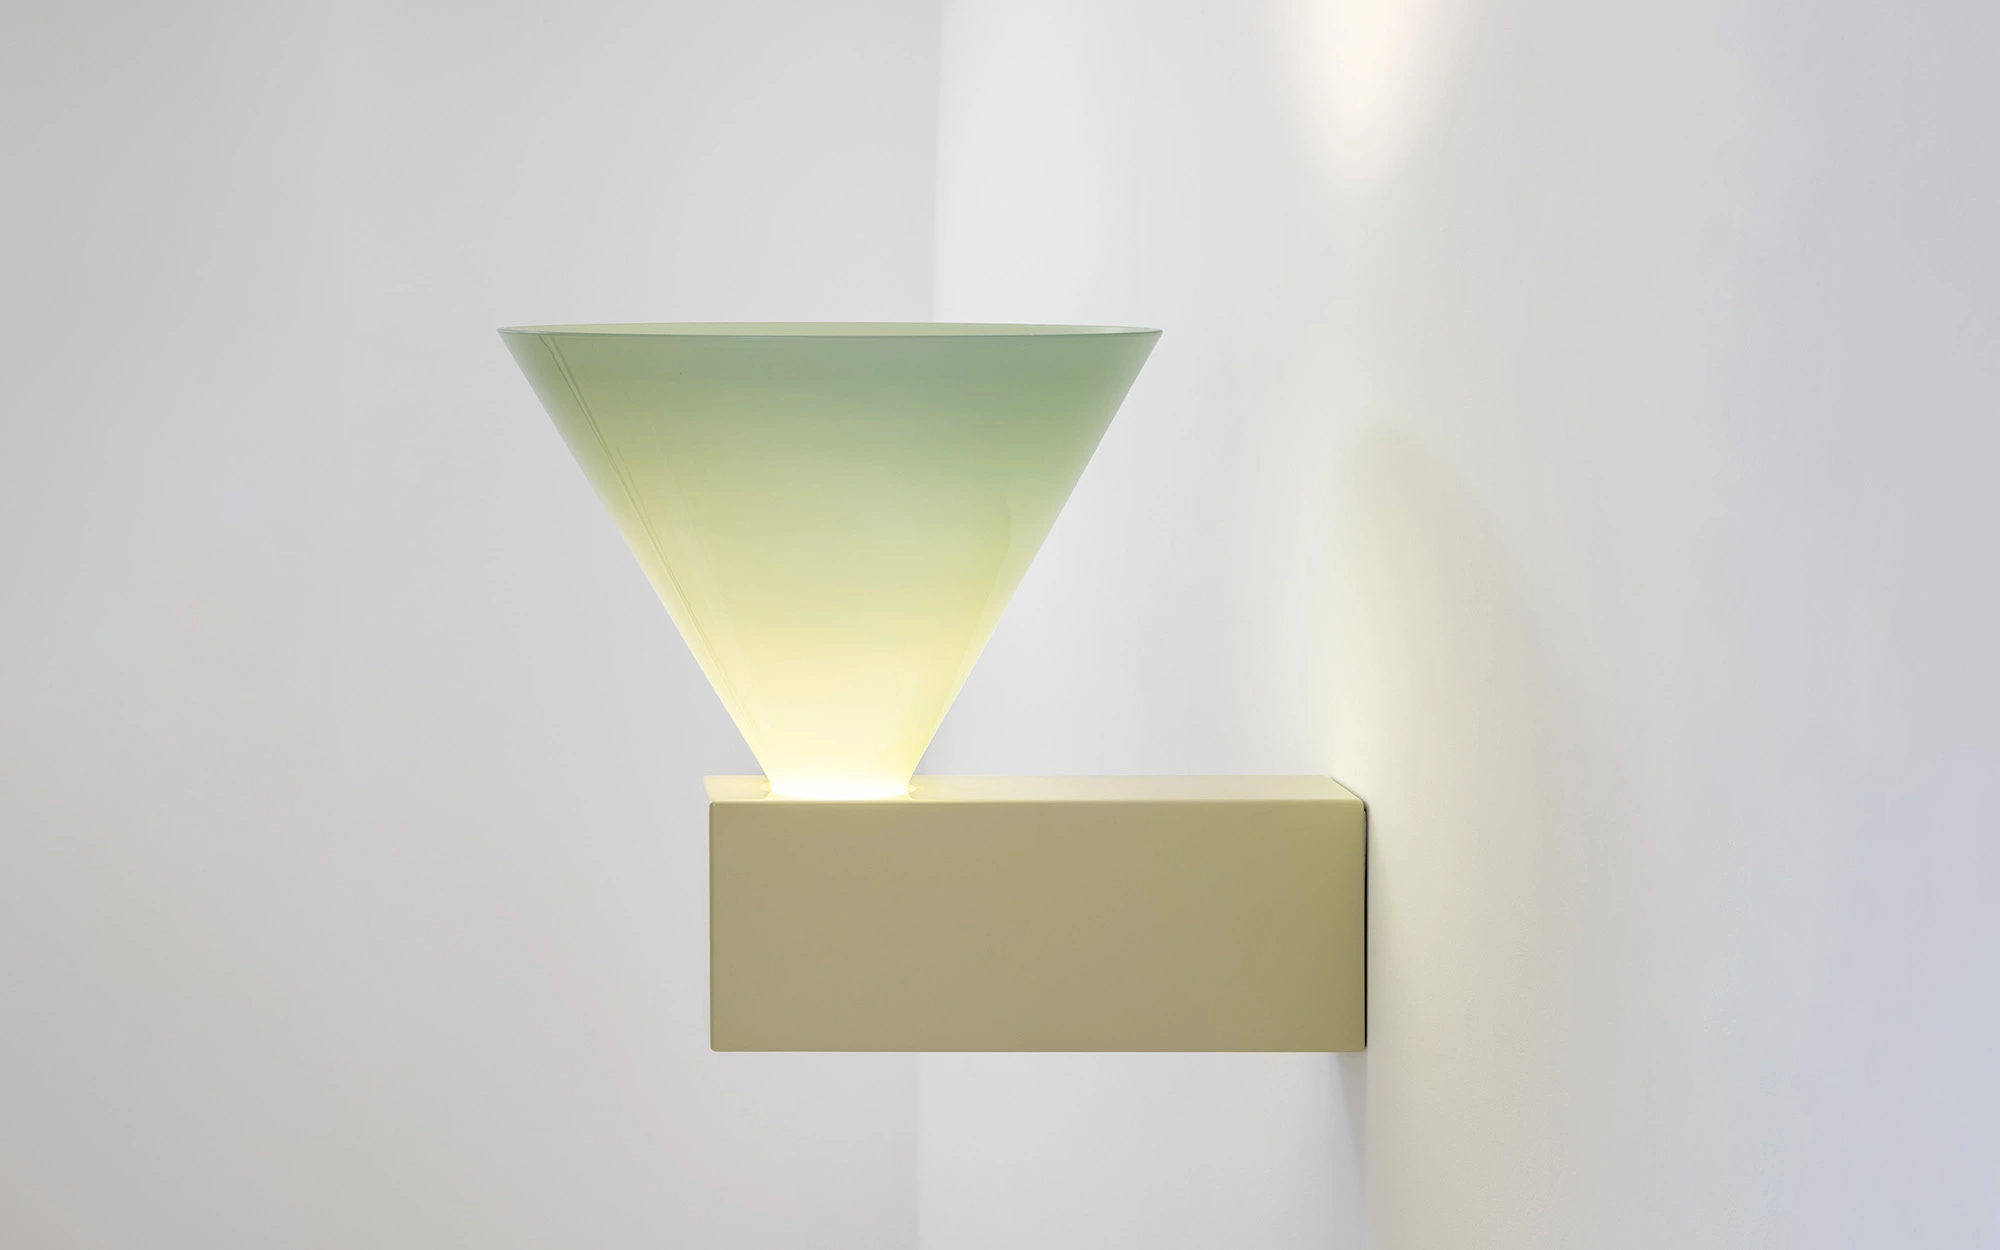 Signal W MONOCHROMATIC - Edward Barber and Jay Osgerby - Wall light - Galerie kreo